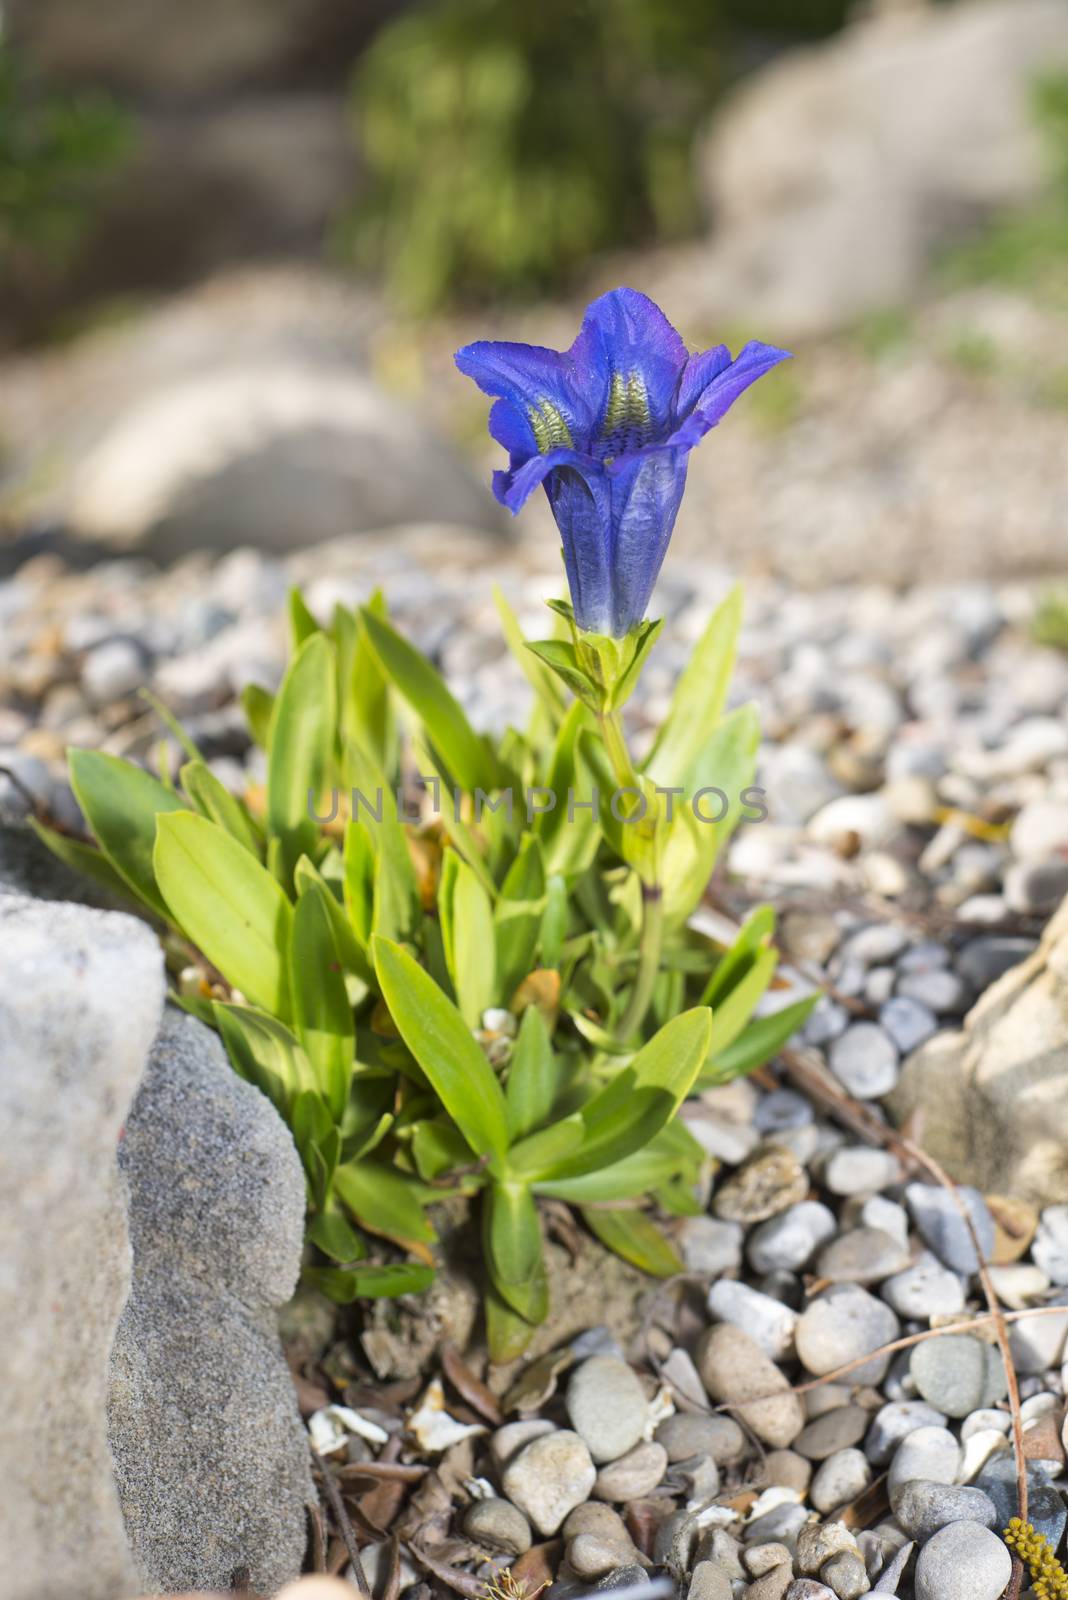 Detail of blue gentian, also known as alpine flower